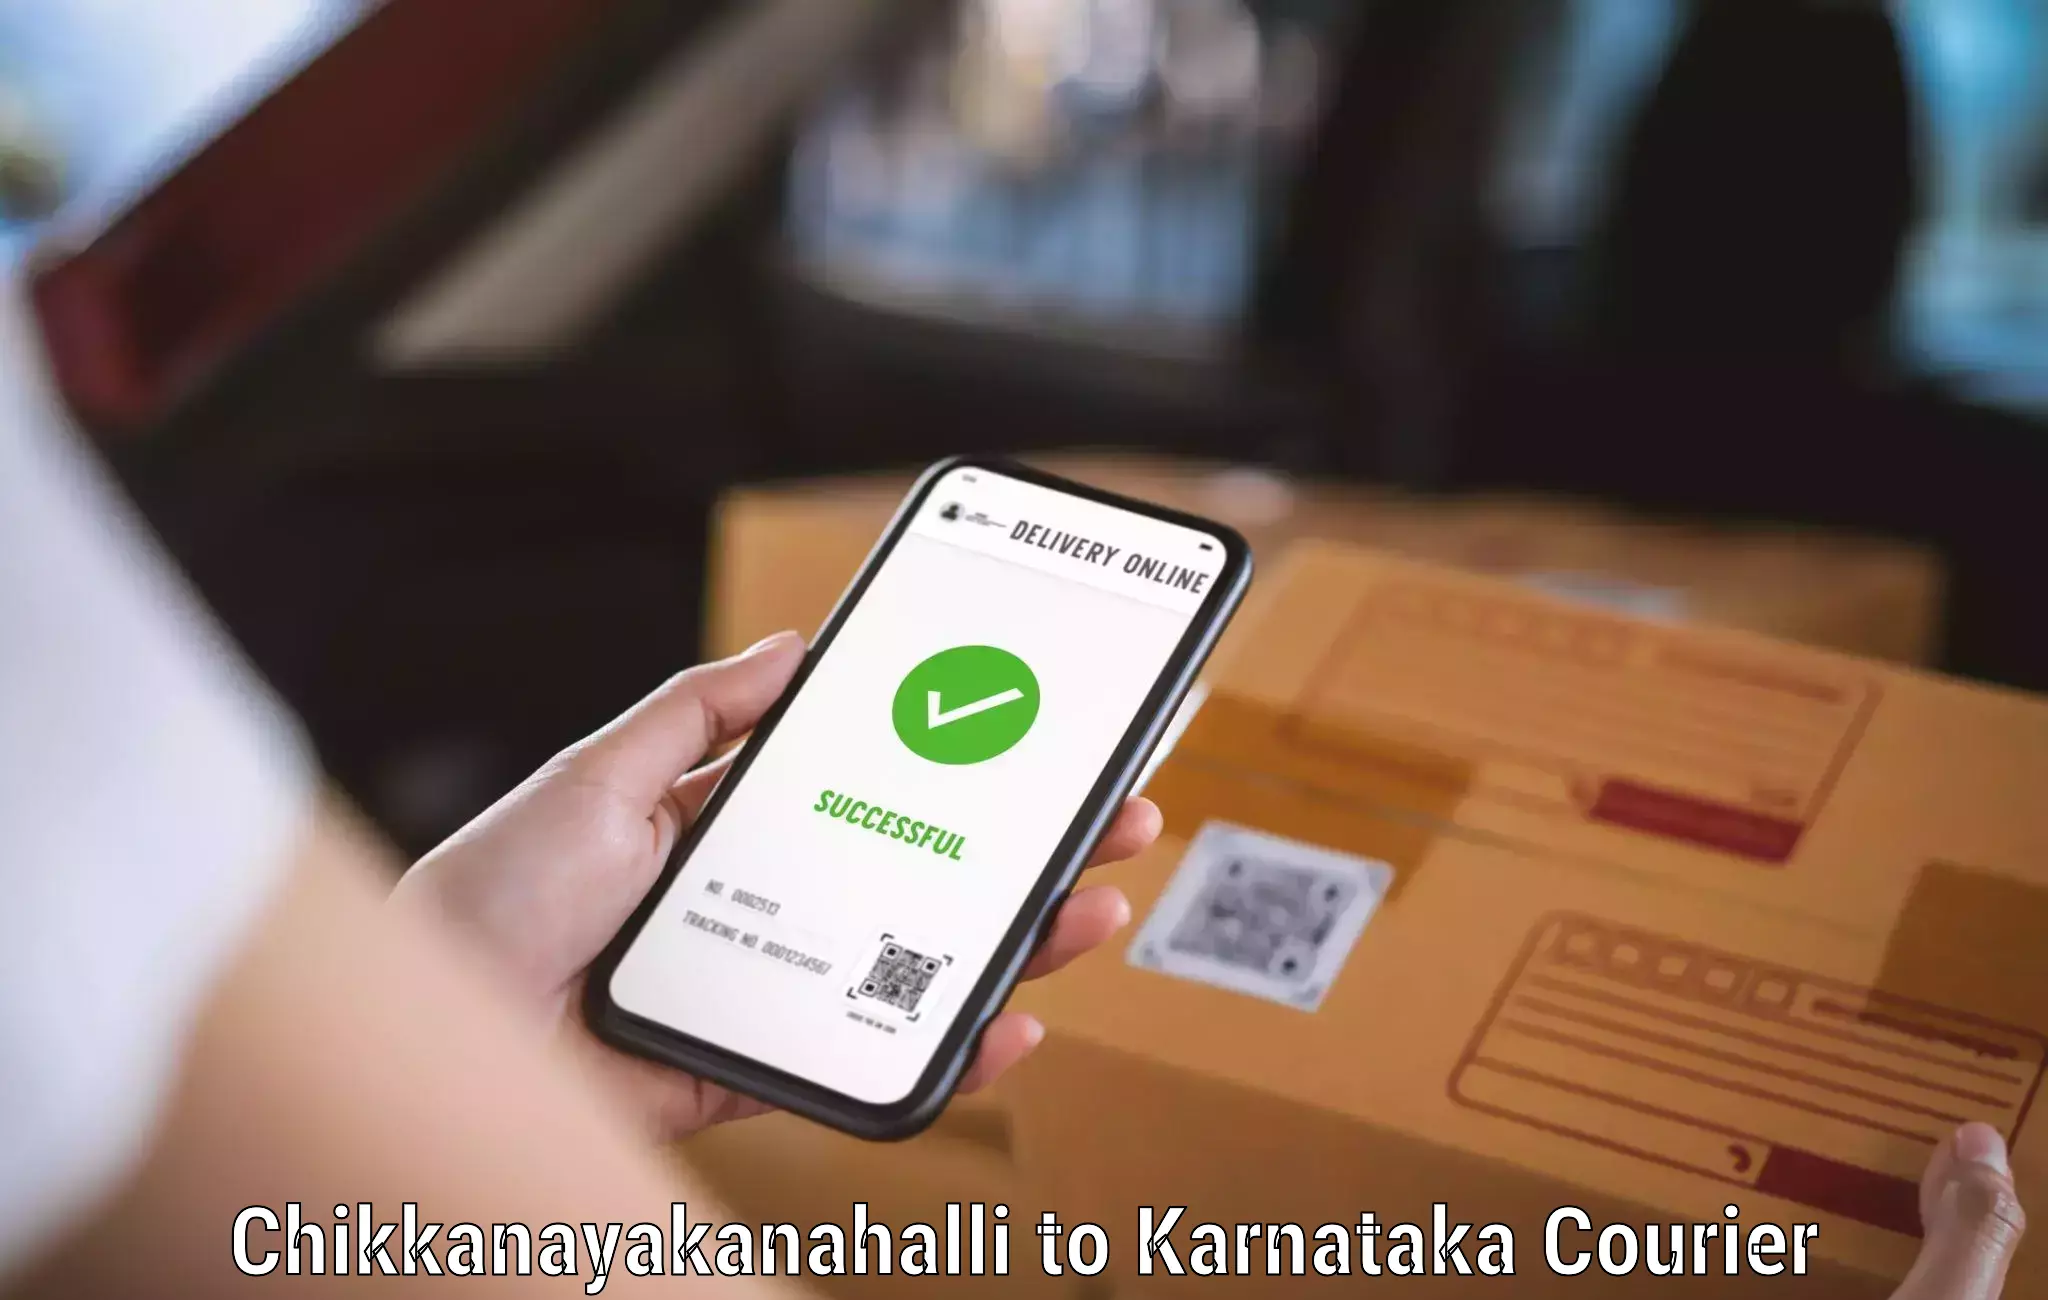 Speedy delivery service Chikkanayakanahalli to Manipal